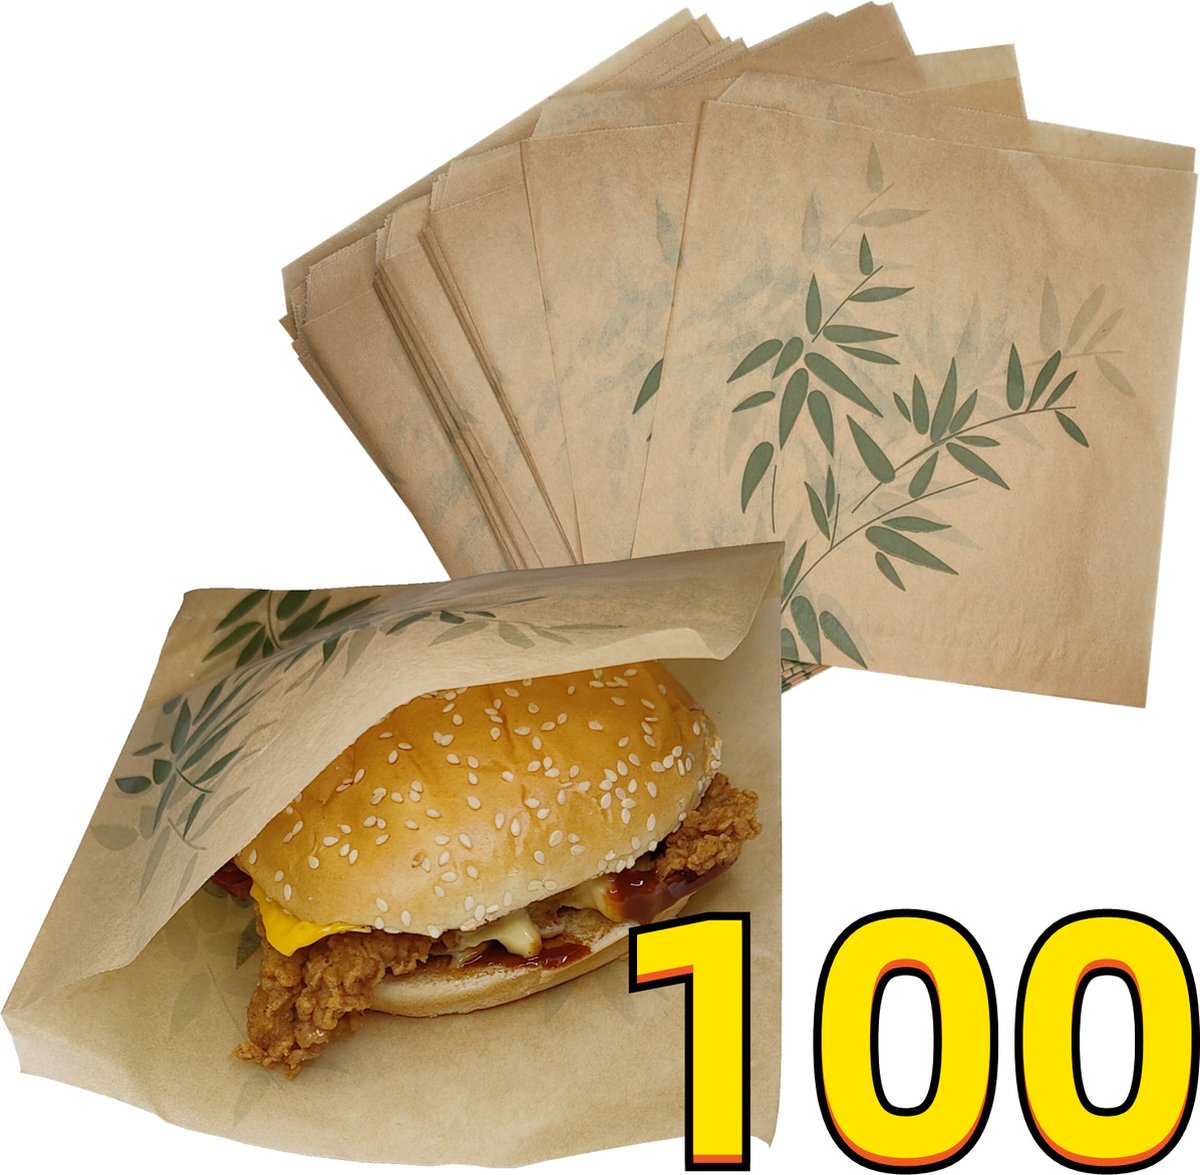 Rainbecom - 100 Stuks - 19 x 17 cm - Hamburger Zakje Papier - Vetvrij Papier - Papieren Zak voor Sandwiches - Bamboe